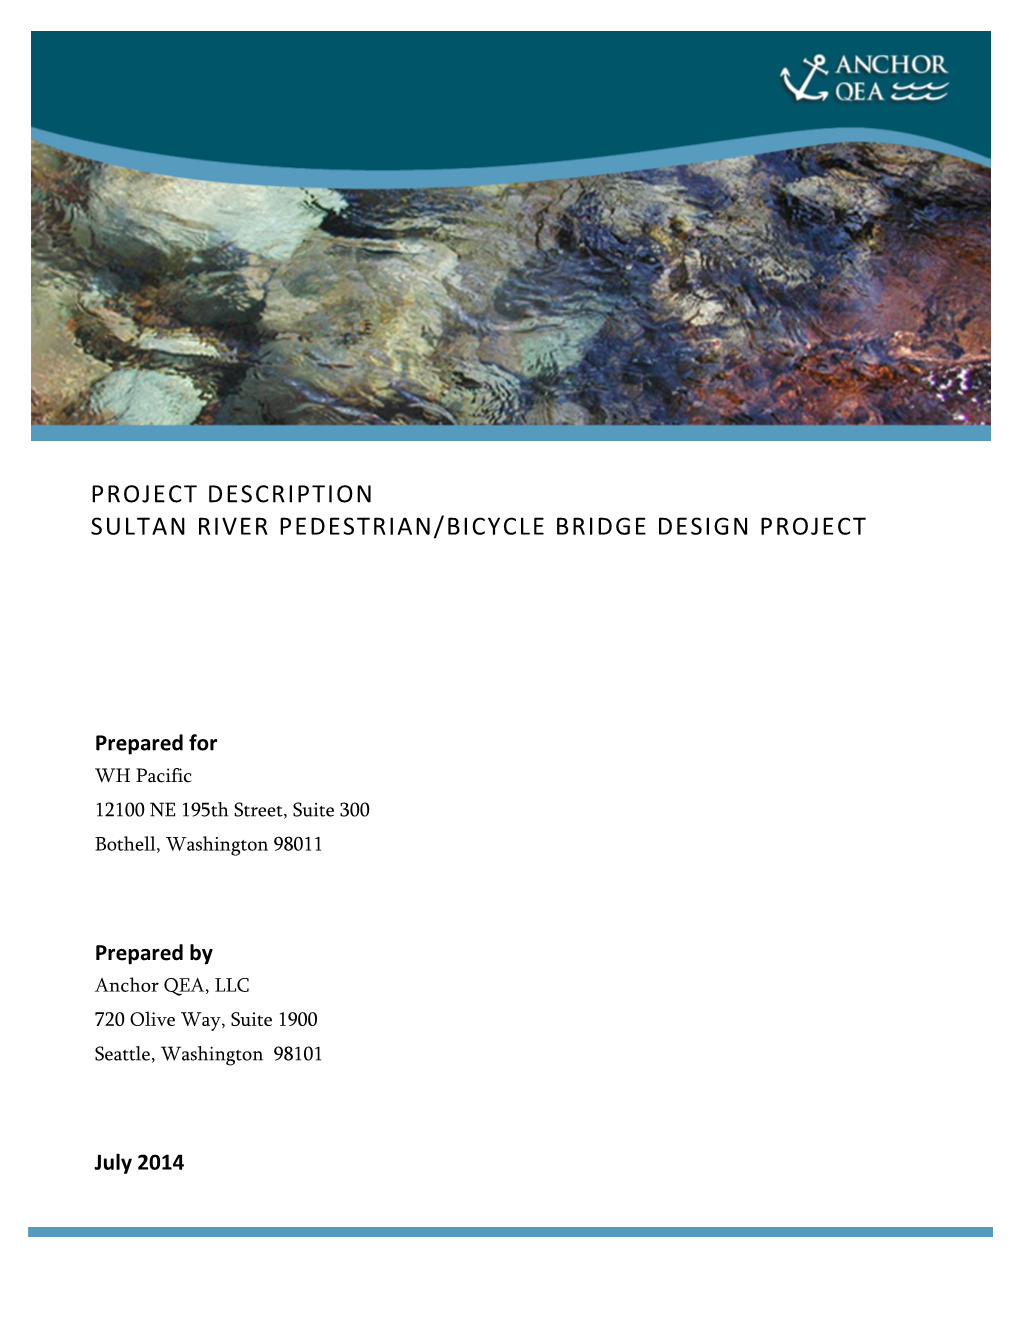 Sultan River Pedestrian/Bicycle Bridge Design Project Description